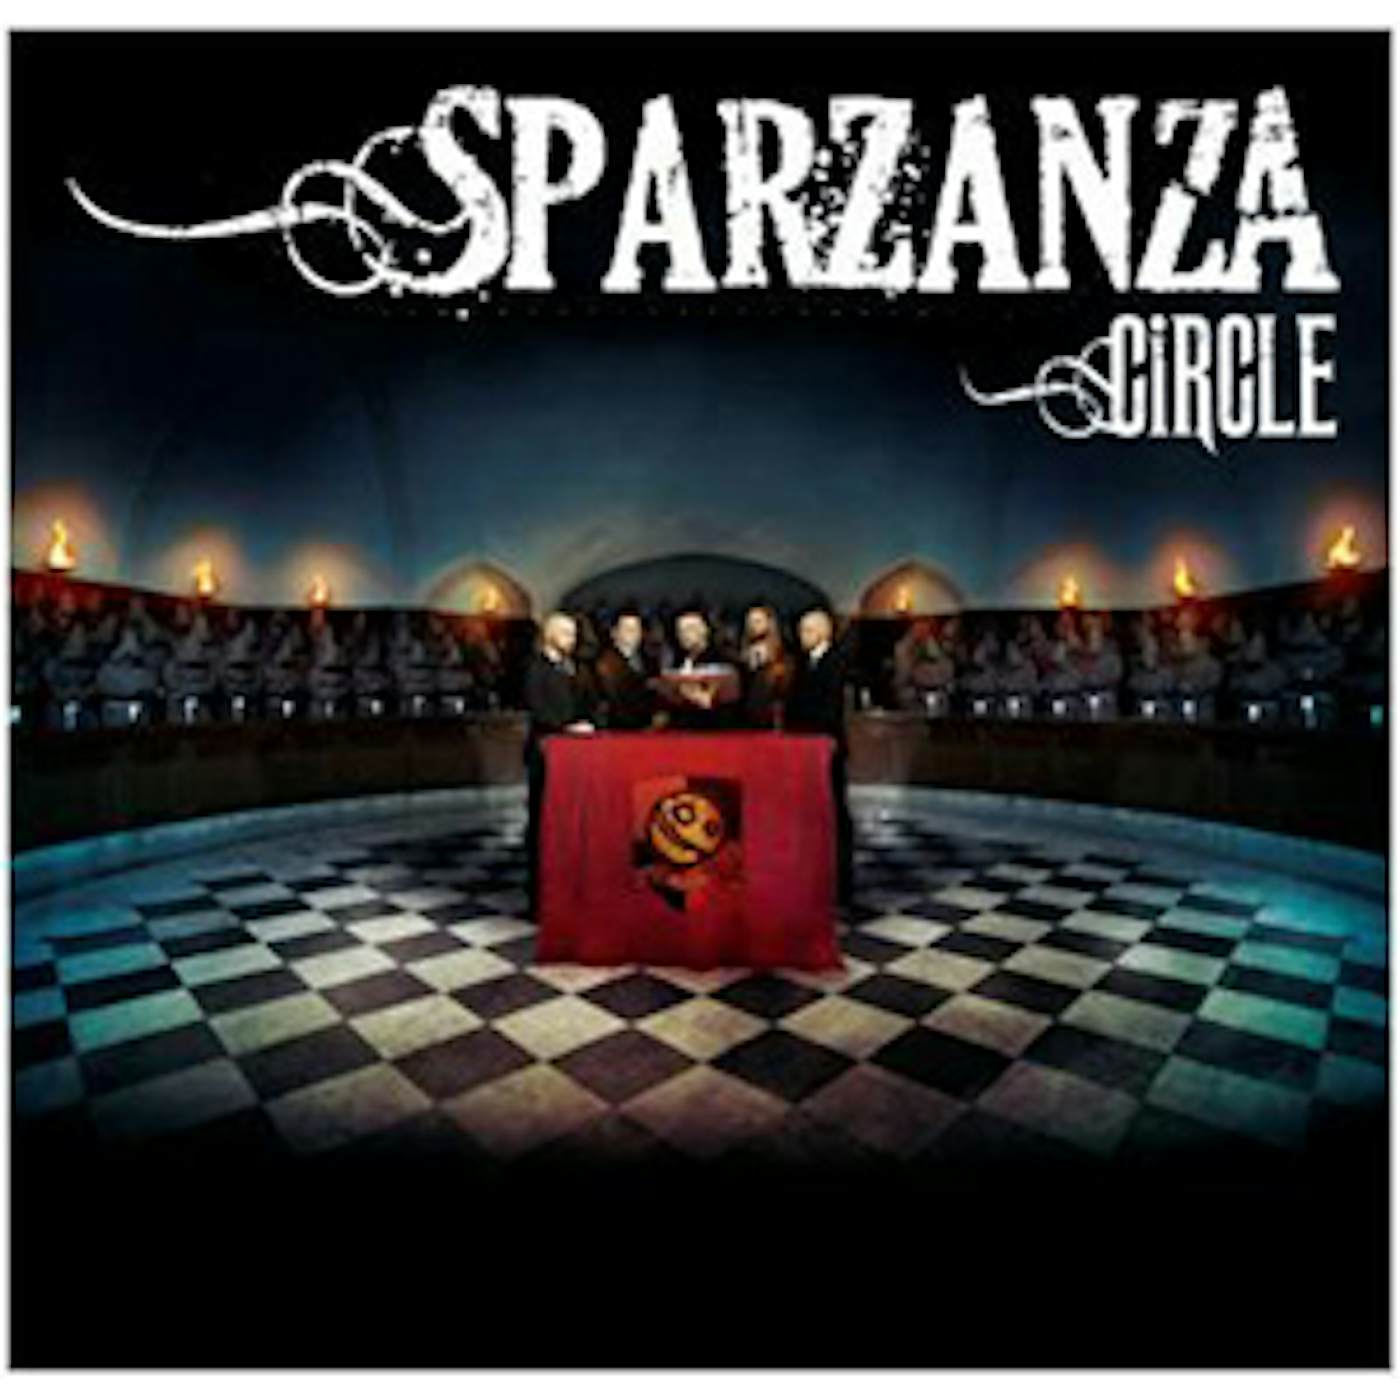 Sparzanza CIRCLE CD